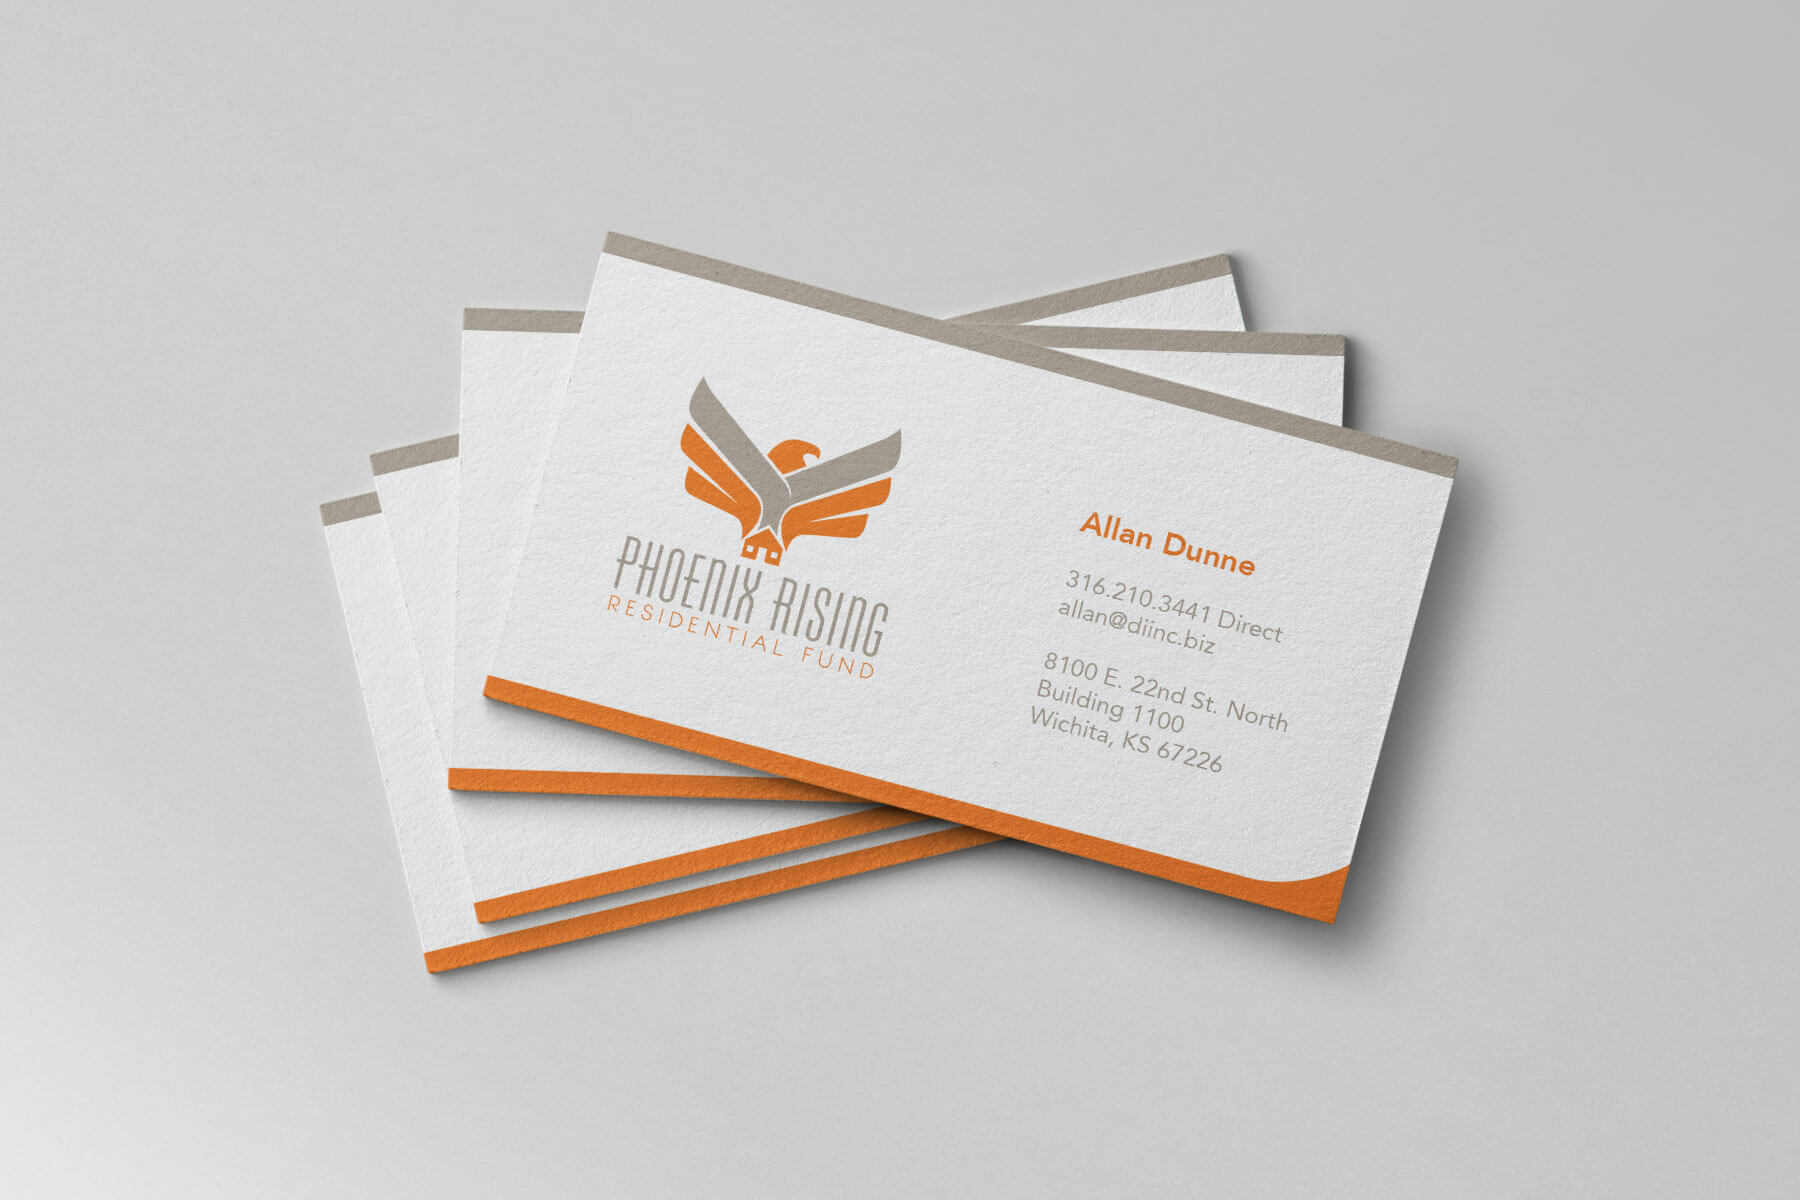 phoenix rising business card